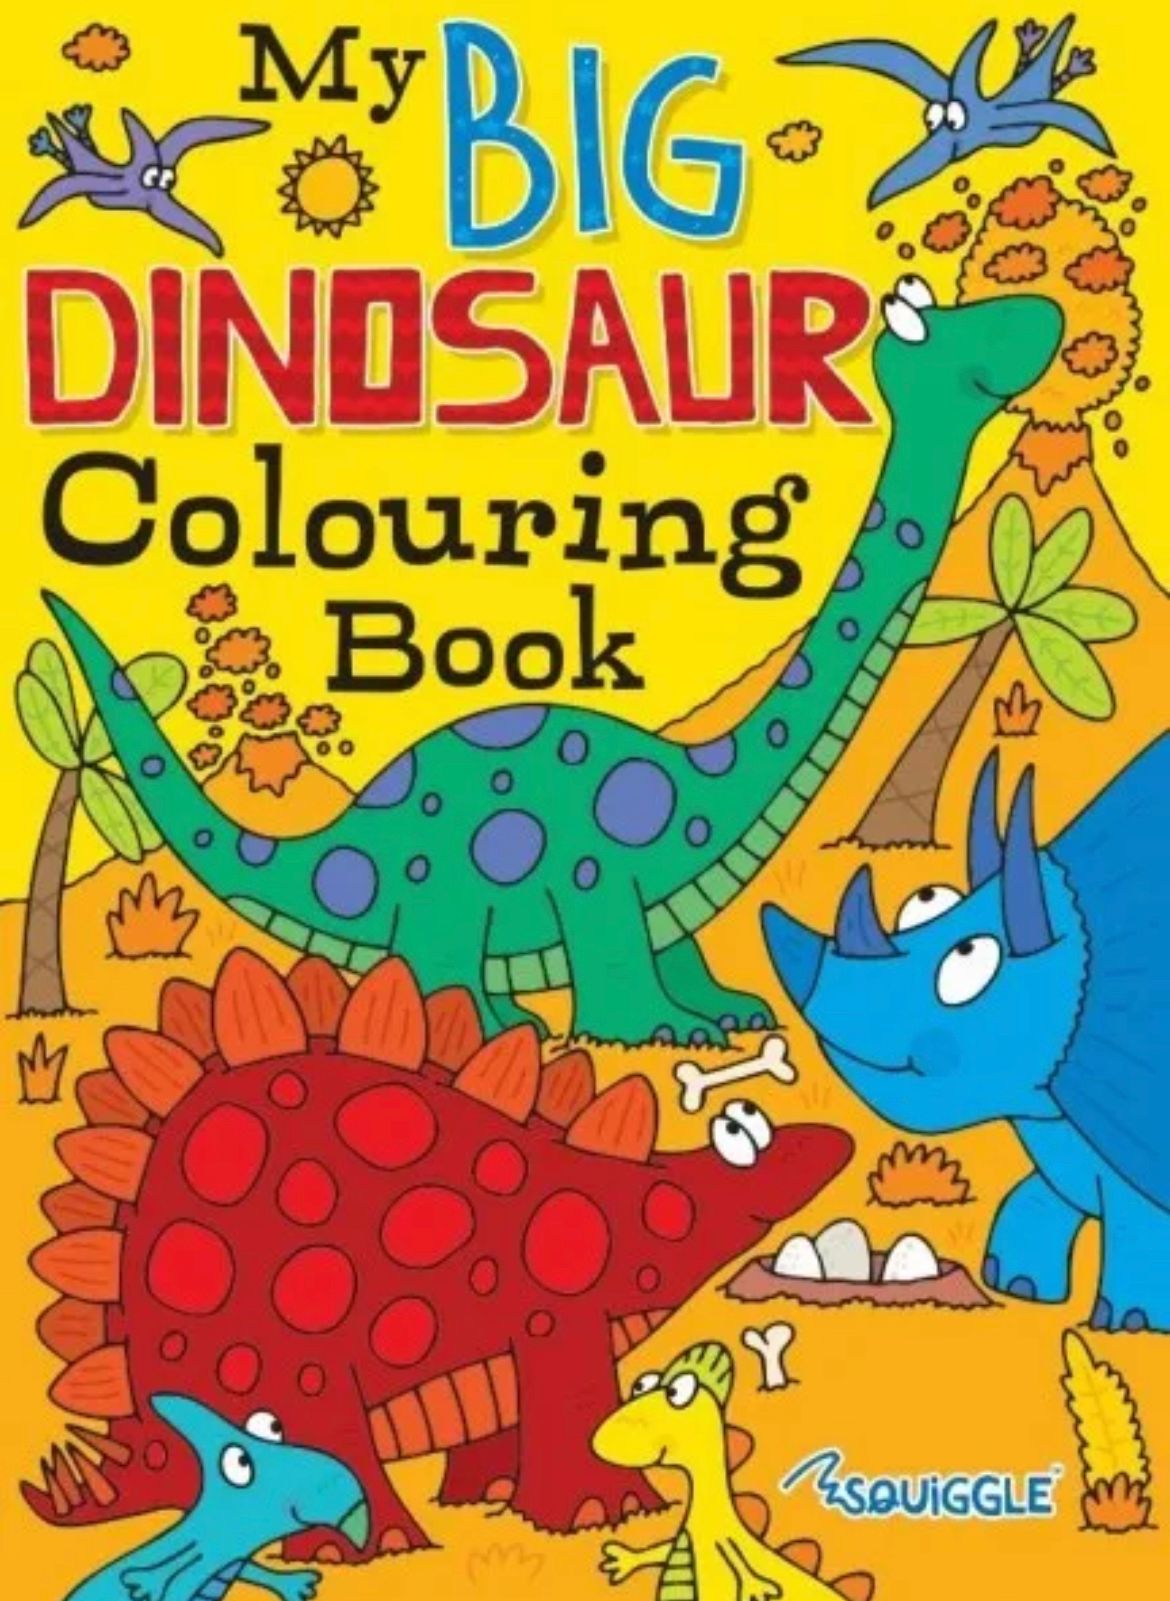 Dinosaur Colourubg Book